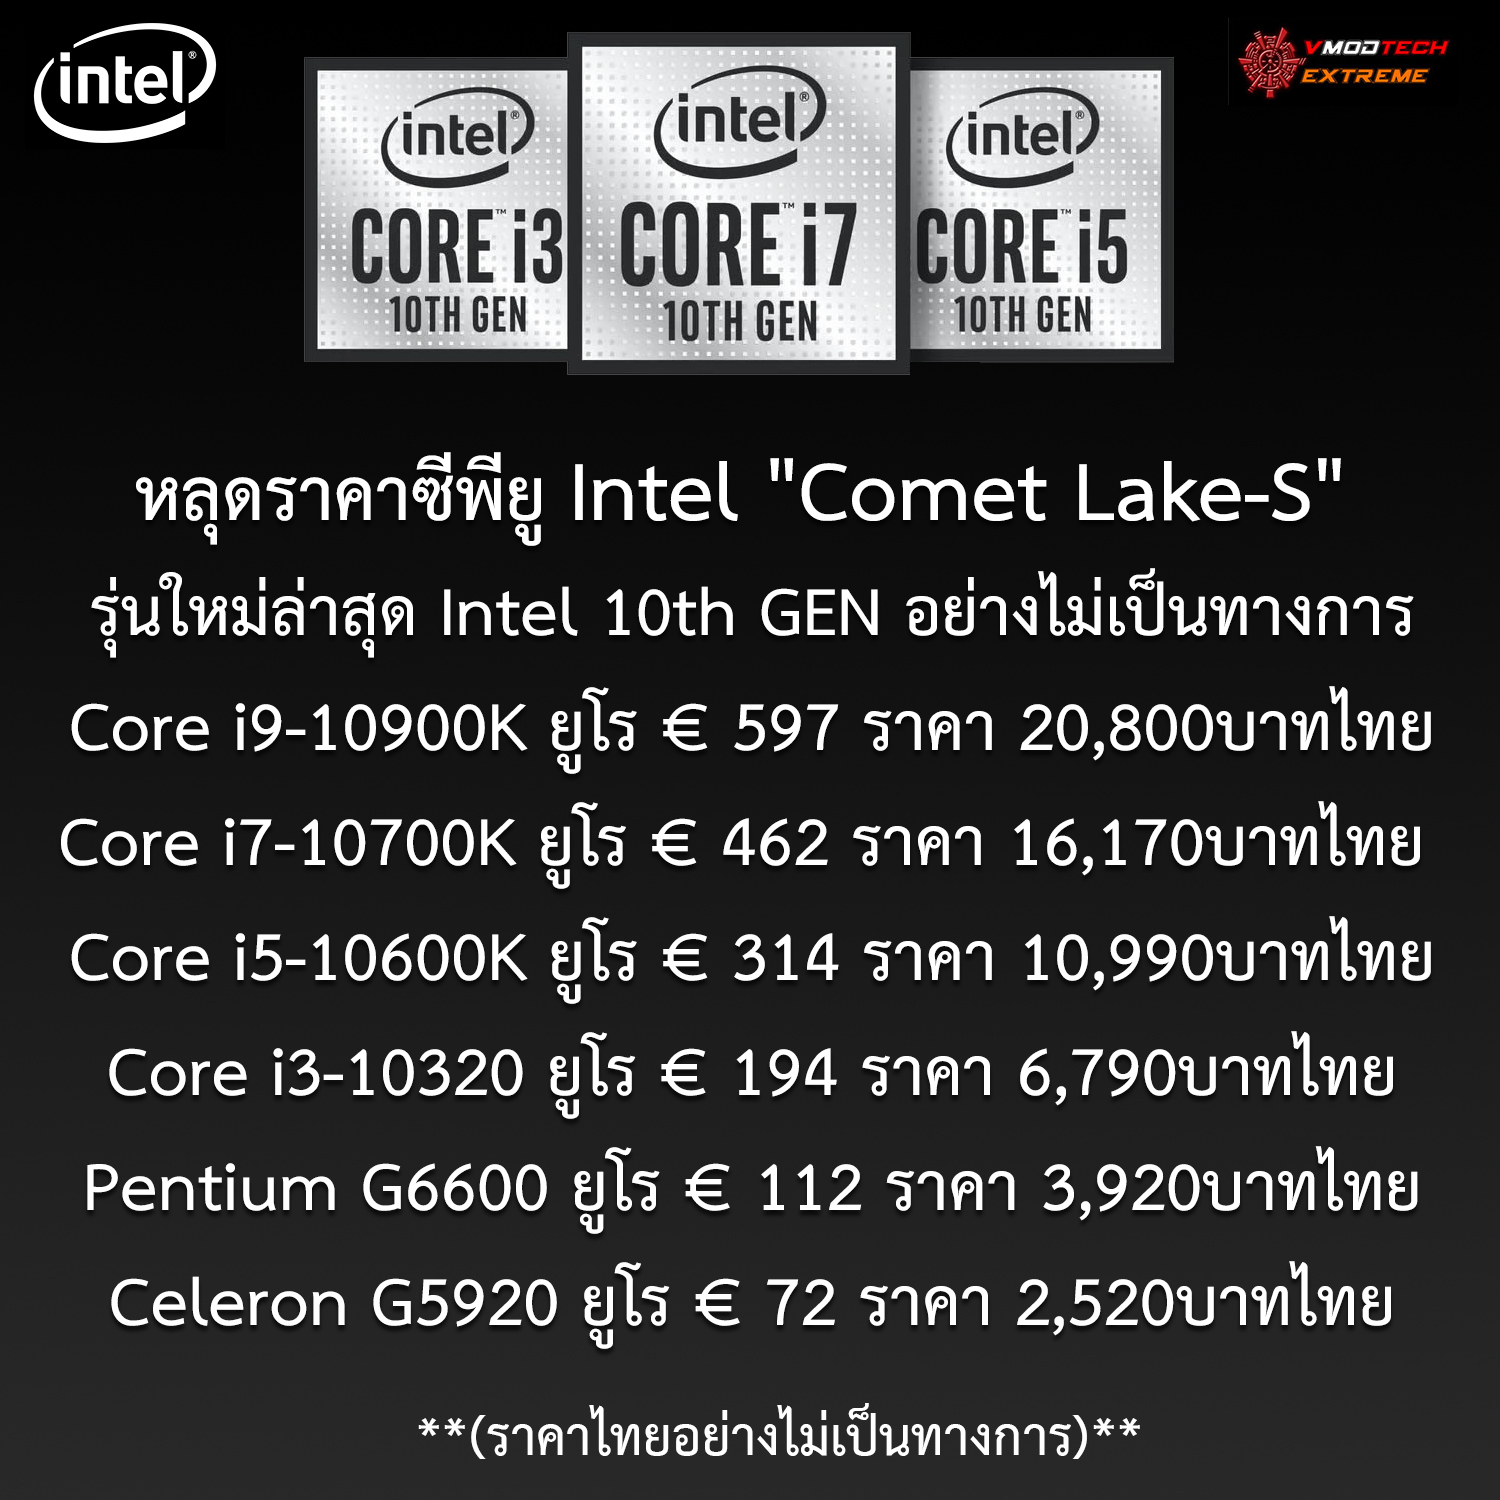 intel 10th gen comet lake s price หลุดราคาซีพียู Intel Comet Lake S รุ่นใหม่ล่าสุด 10th GEN อย่างไม่เป็นทางการ